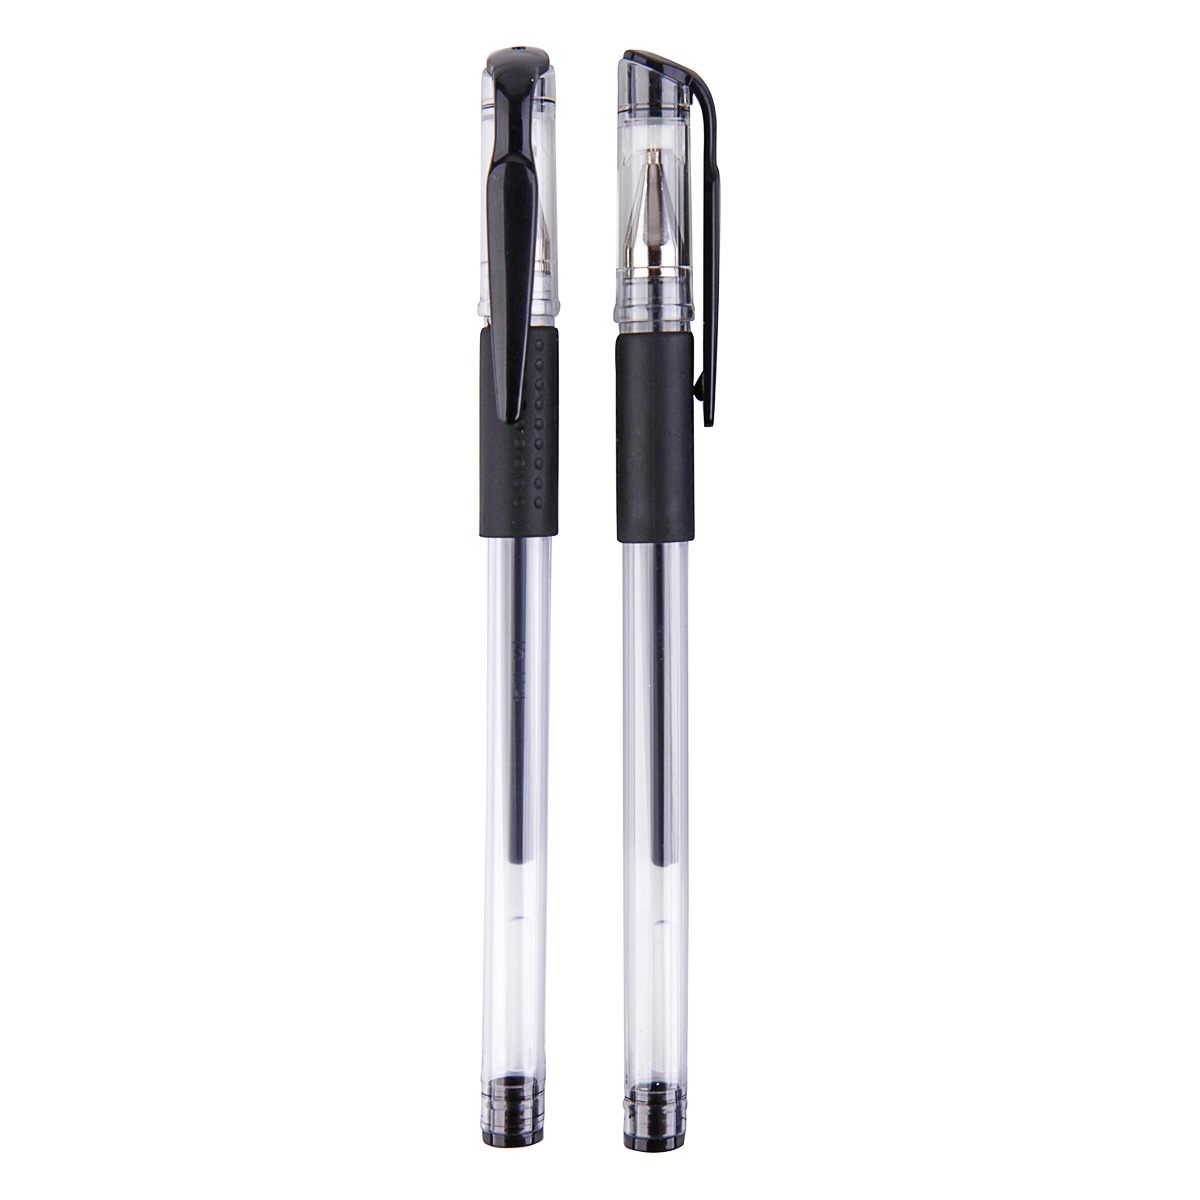 Ручка гелевая Aro черная, 1 мм, 1 шт.